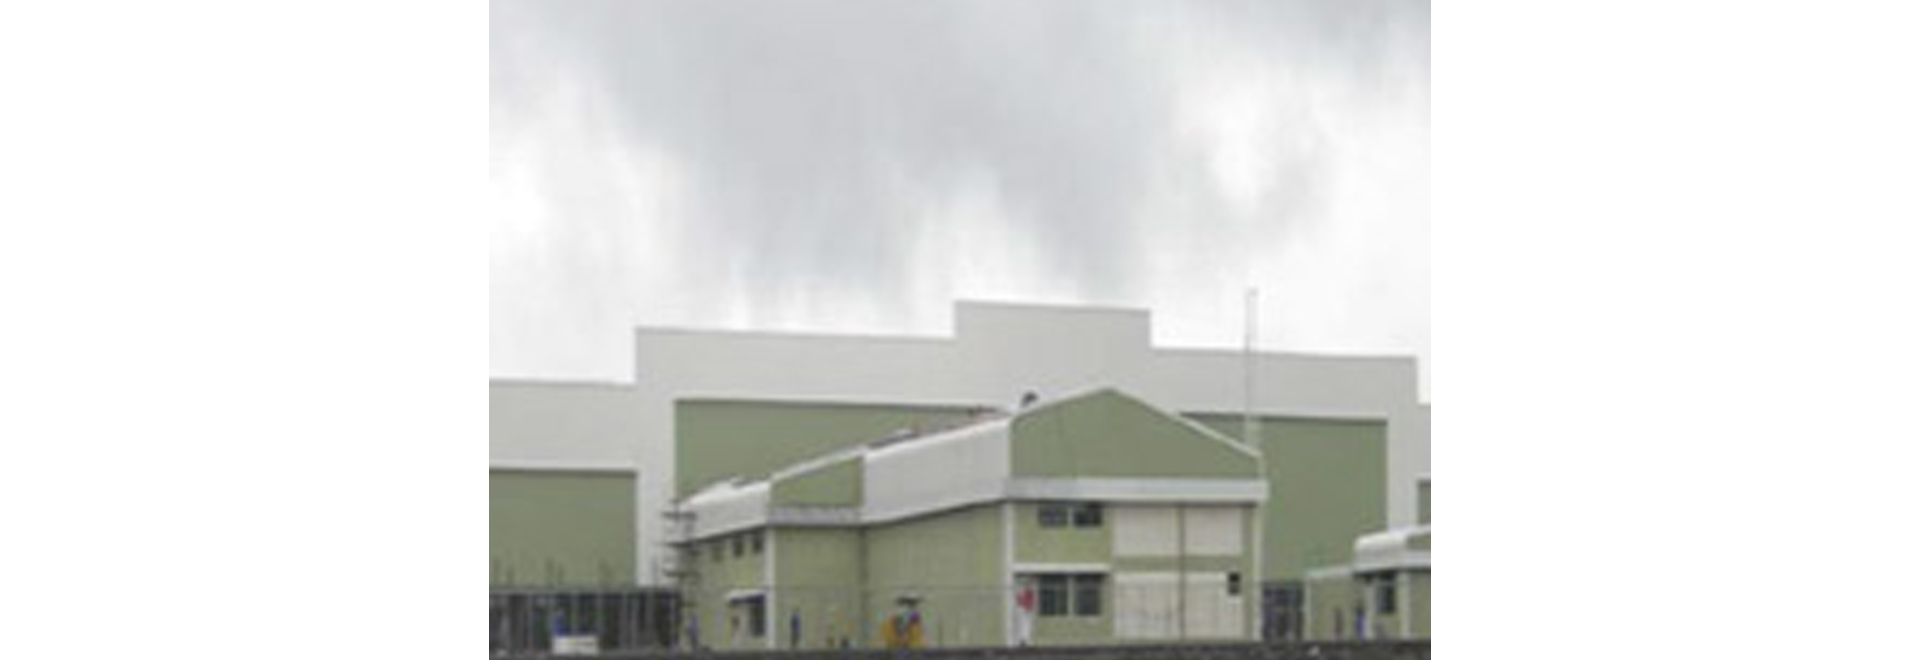 Automobile Manufacturing Facility, Mahindra Navistar Engines Pvt. Ltd